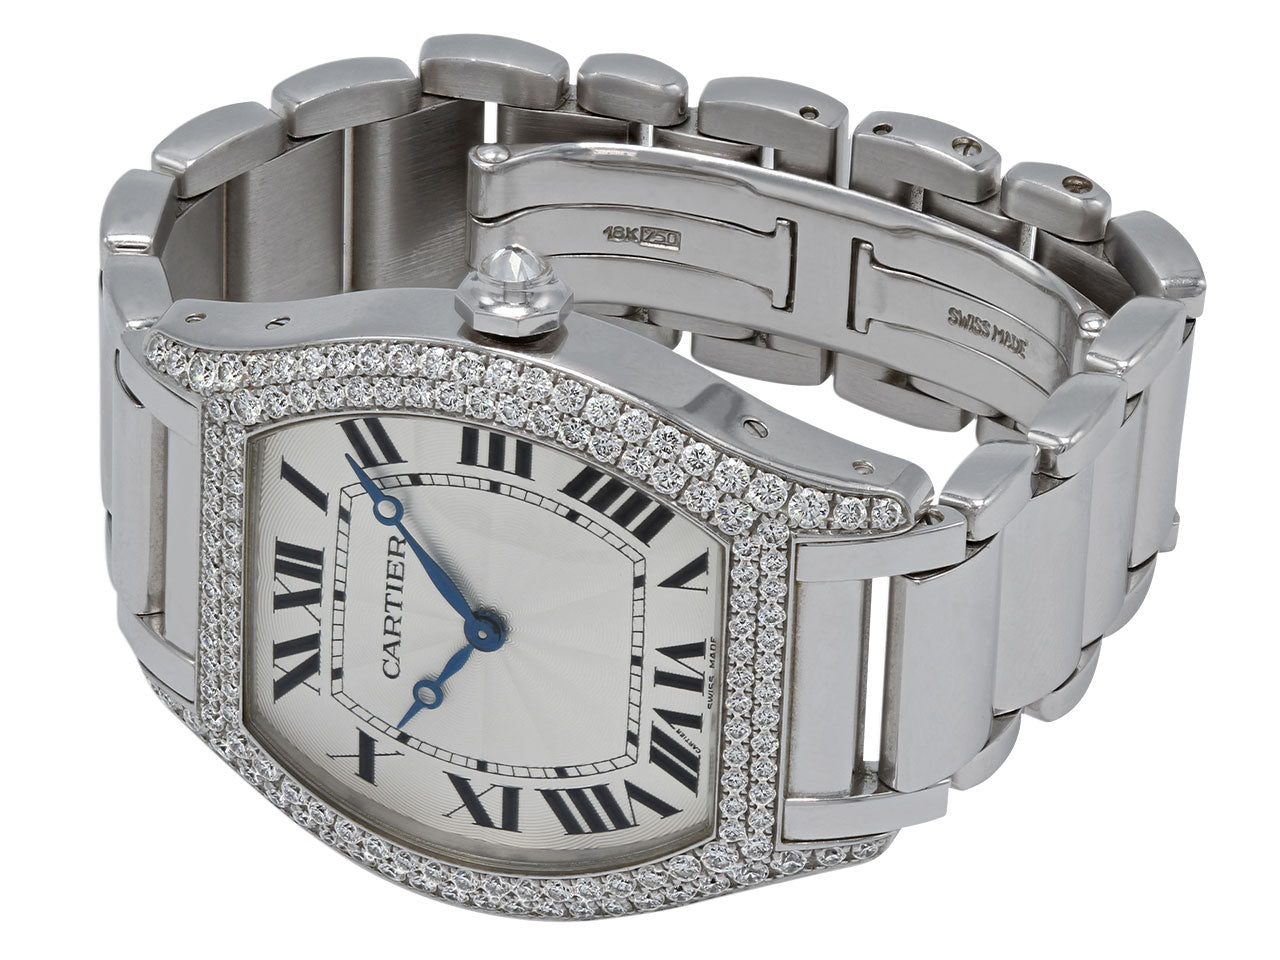 Cartier Diamond 'Tortue' Watch in 18K White Gold, 34 mm